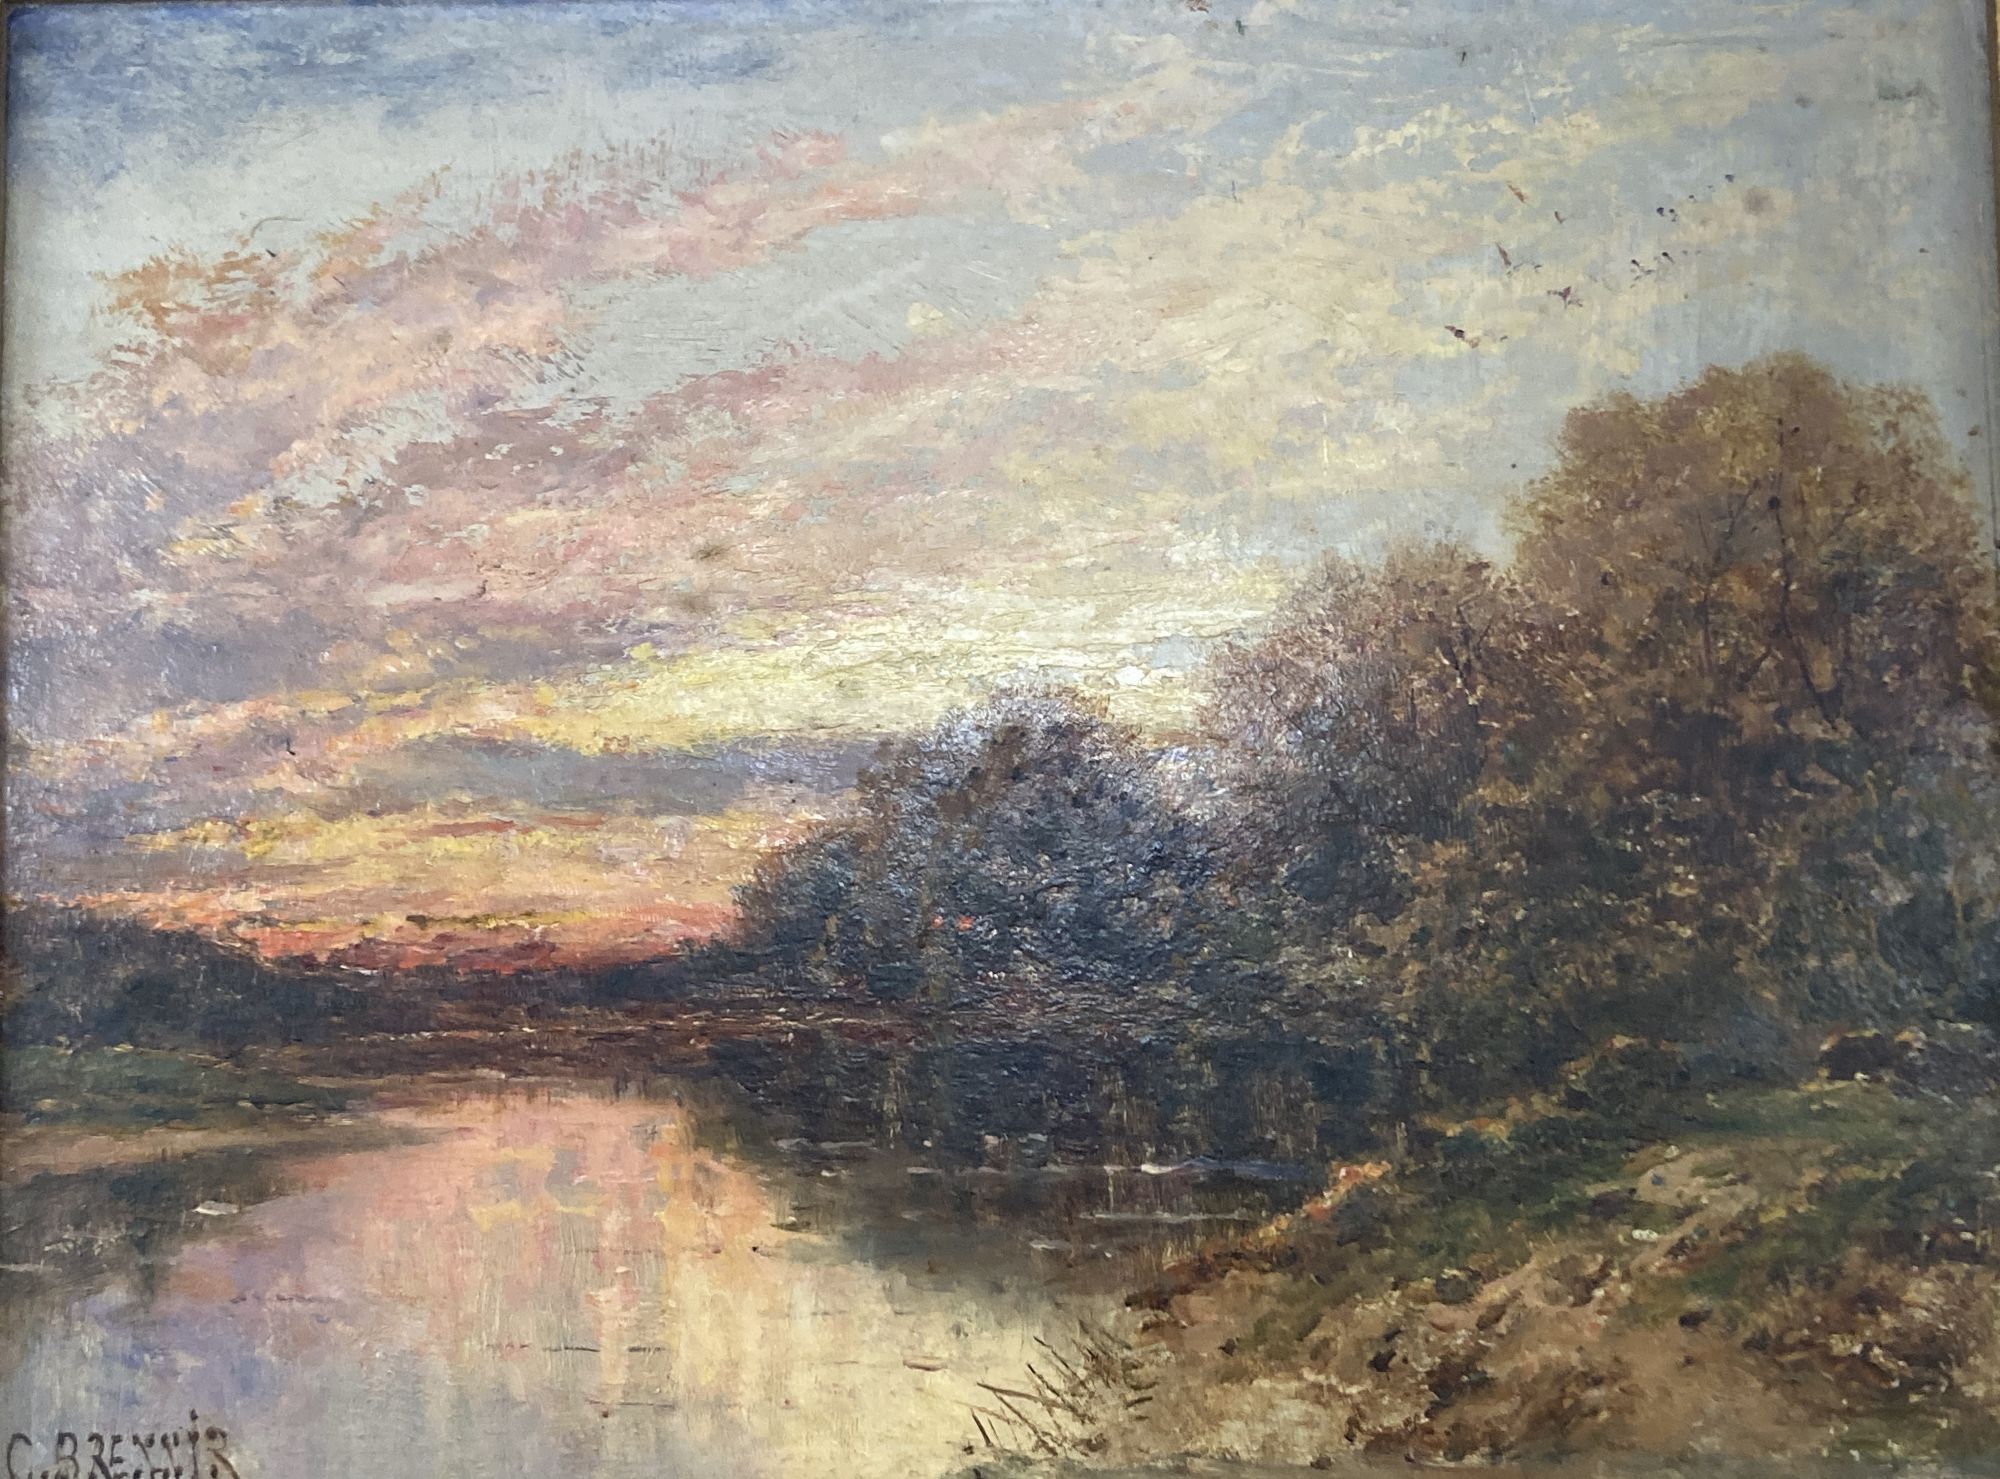 Carl Brennir (1850-1920), oil on mill board, River landscape at sunset, signed, 22 x 30cm